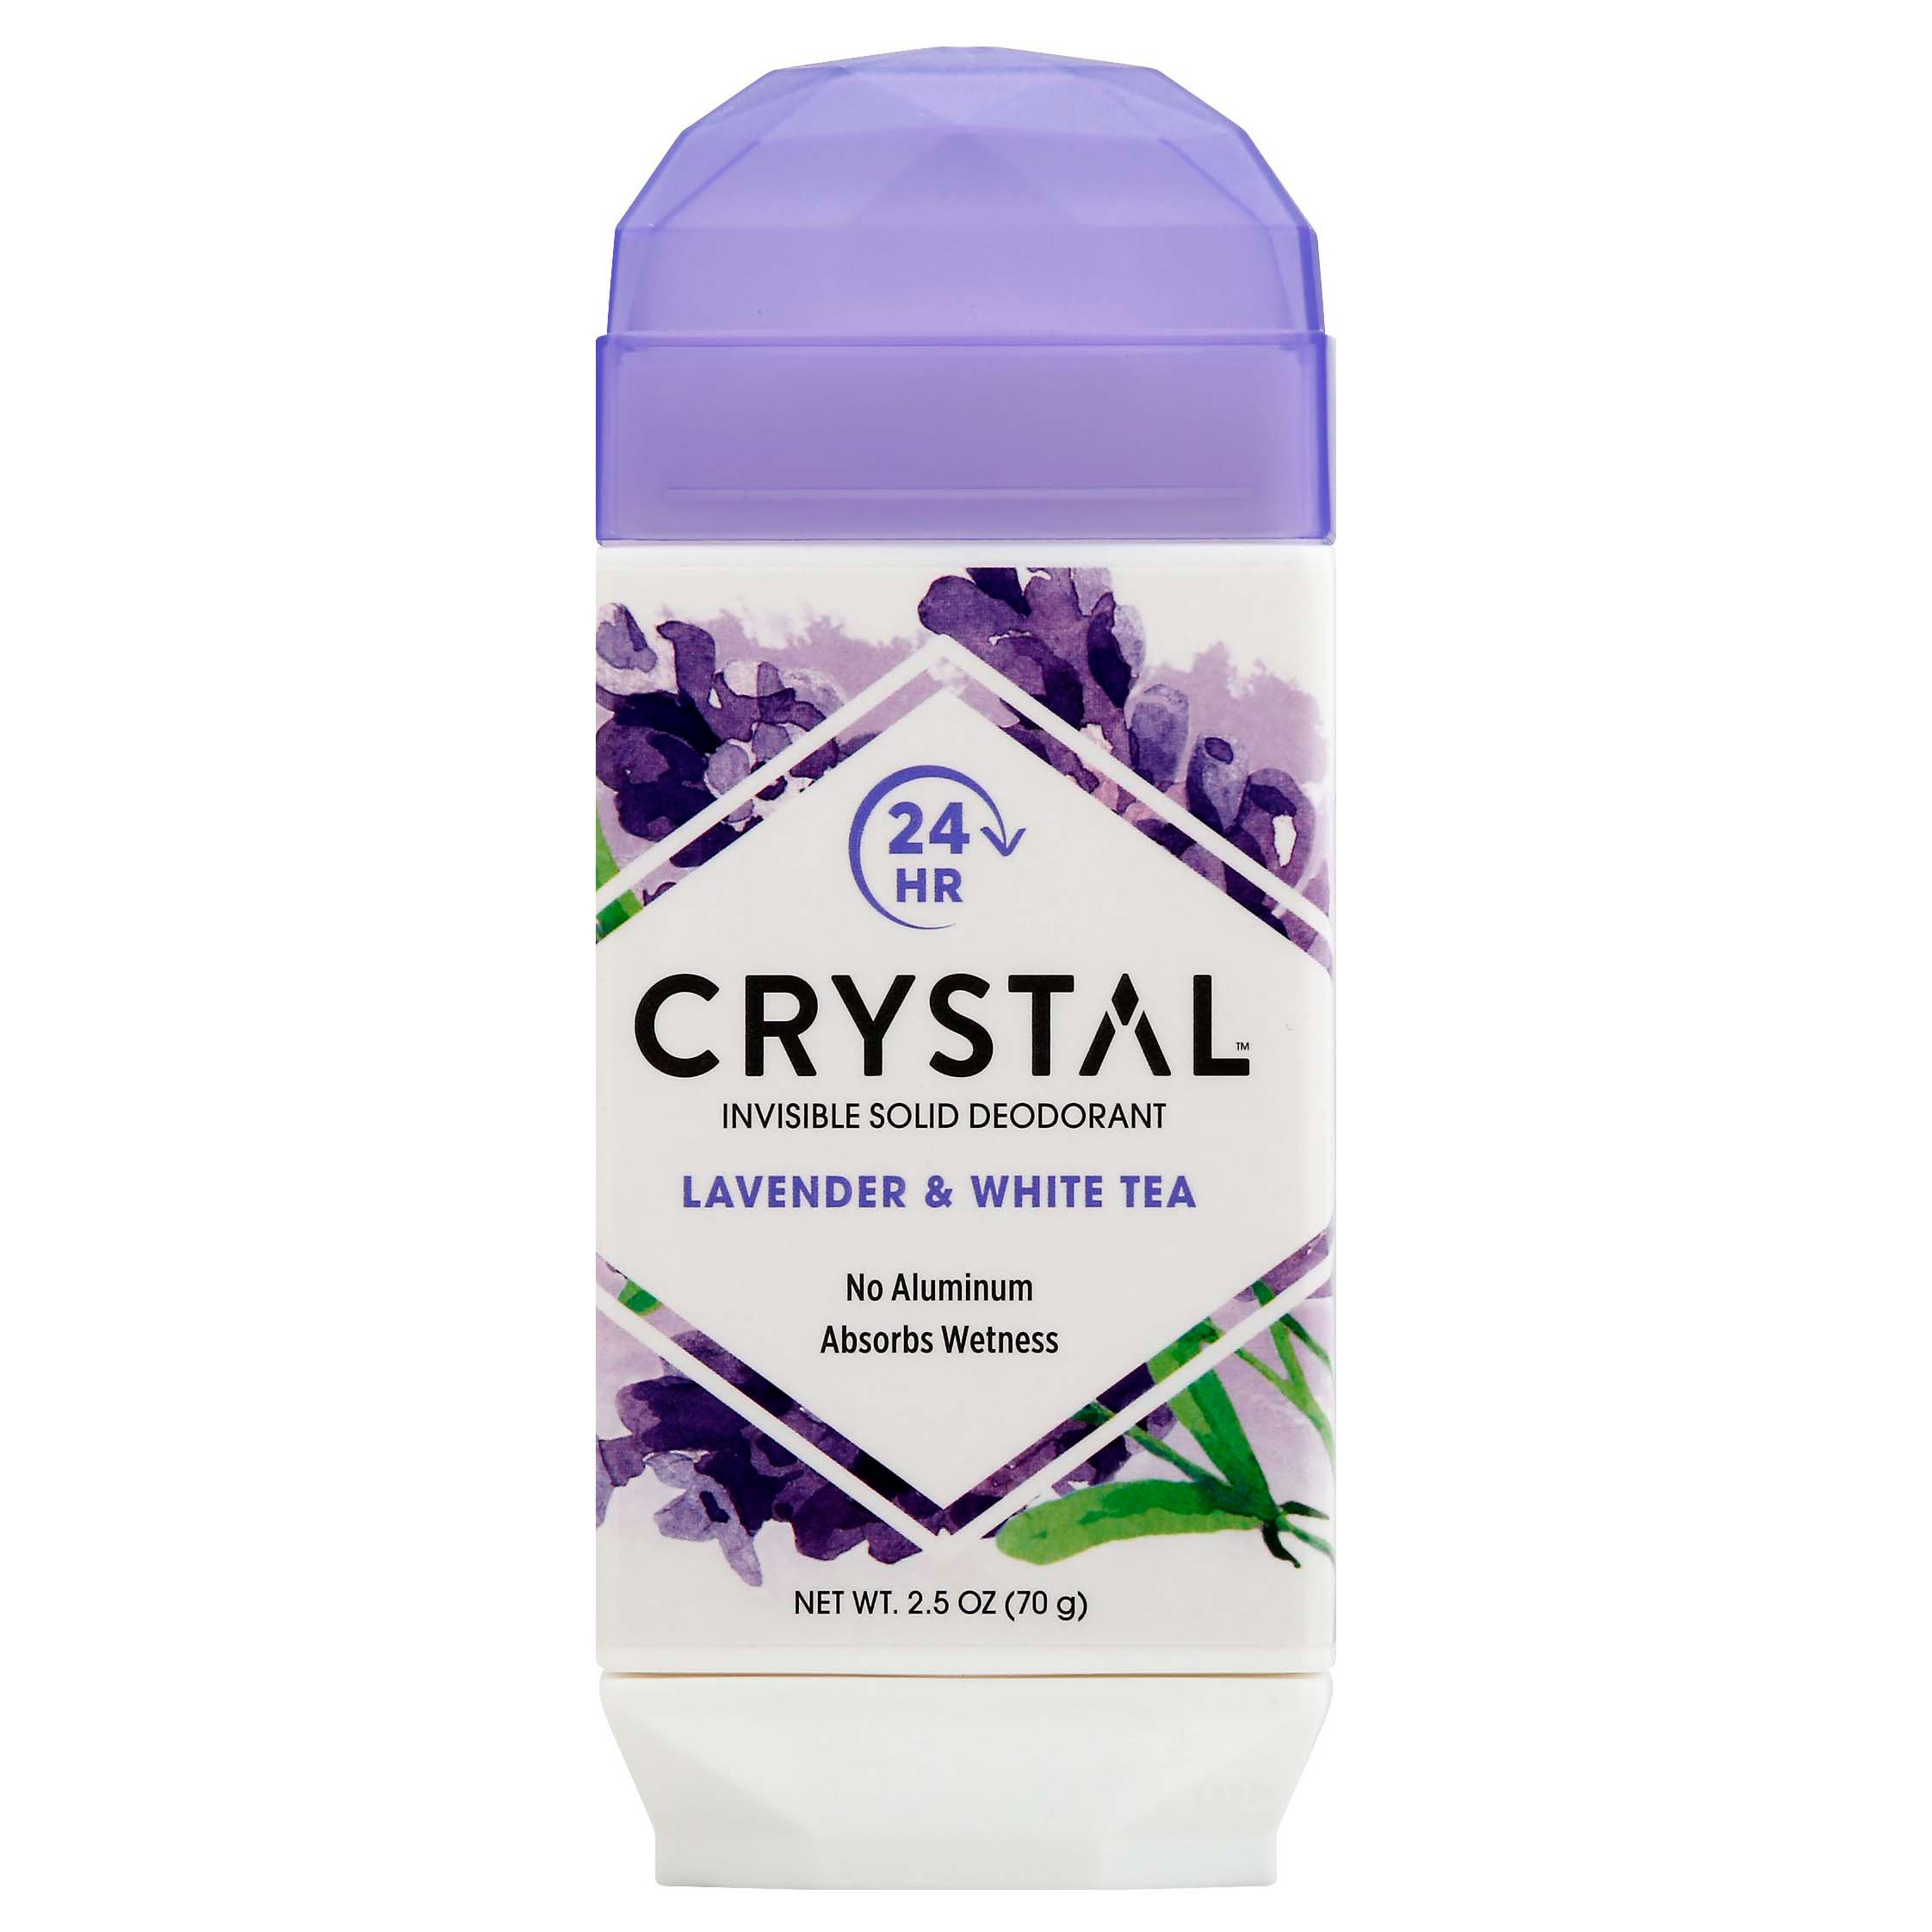 Дезодорант crystal. Дезодорант Кристалл 70 гр Crystal Deodorant. Дезодорант Crystal американский. Дезодорант Crystal Invisible Solid Deodorant. Лавендер Кристалл (Lavender Crystal).